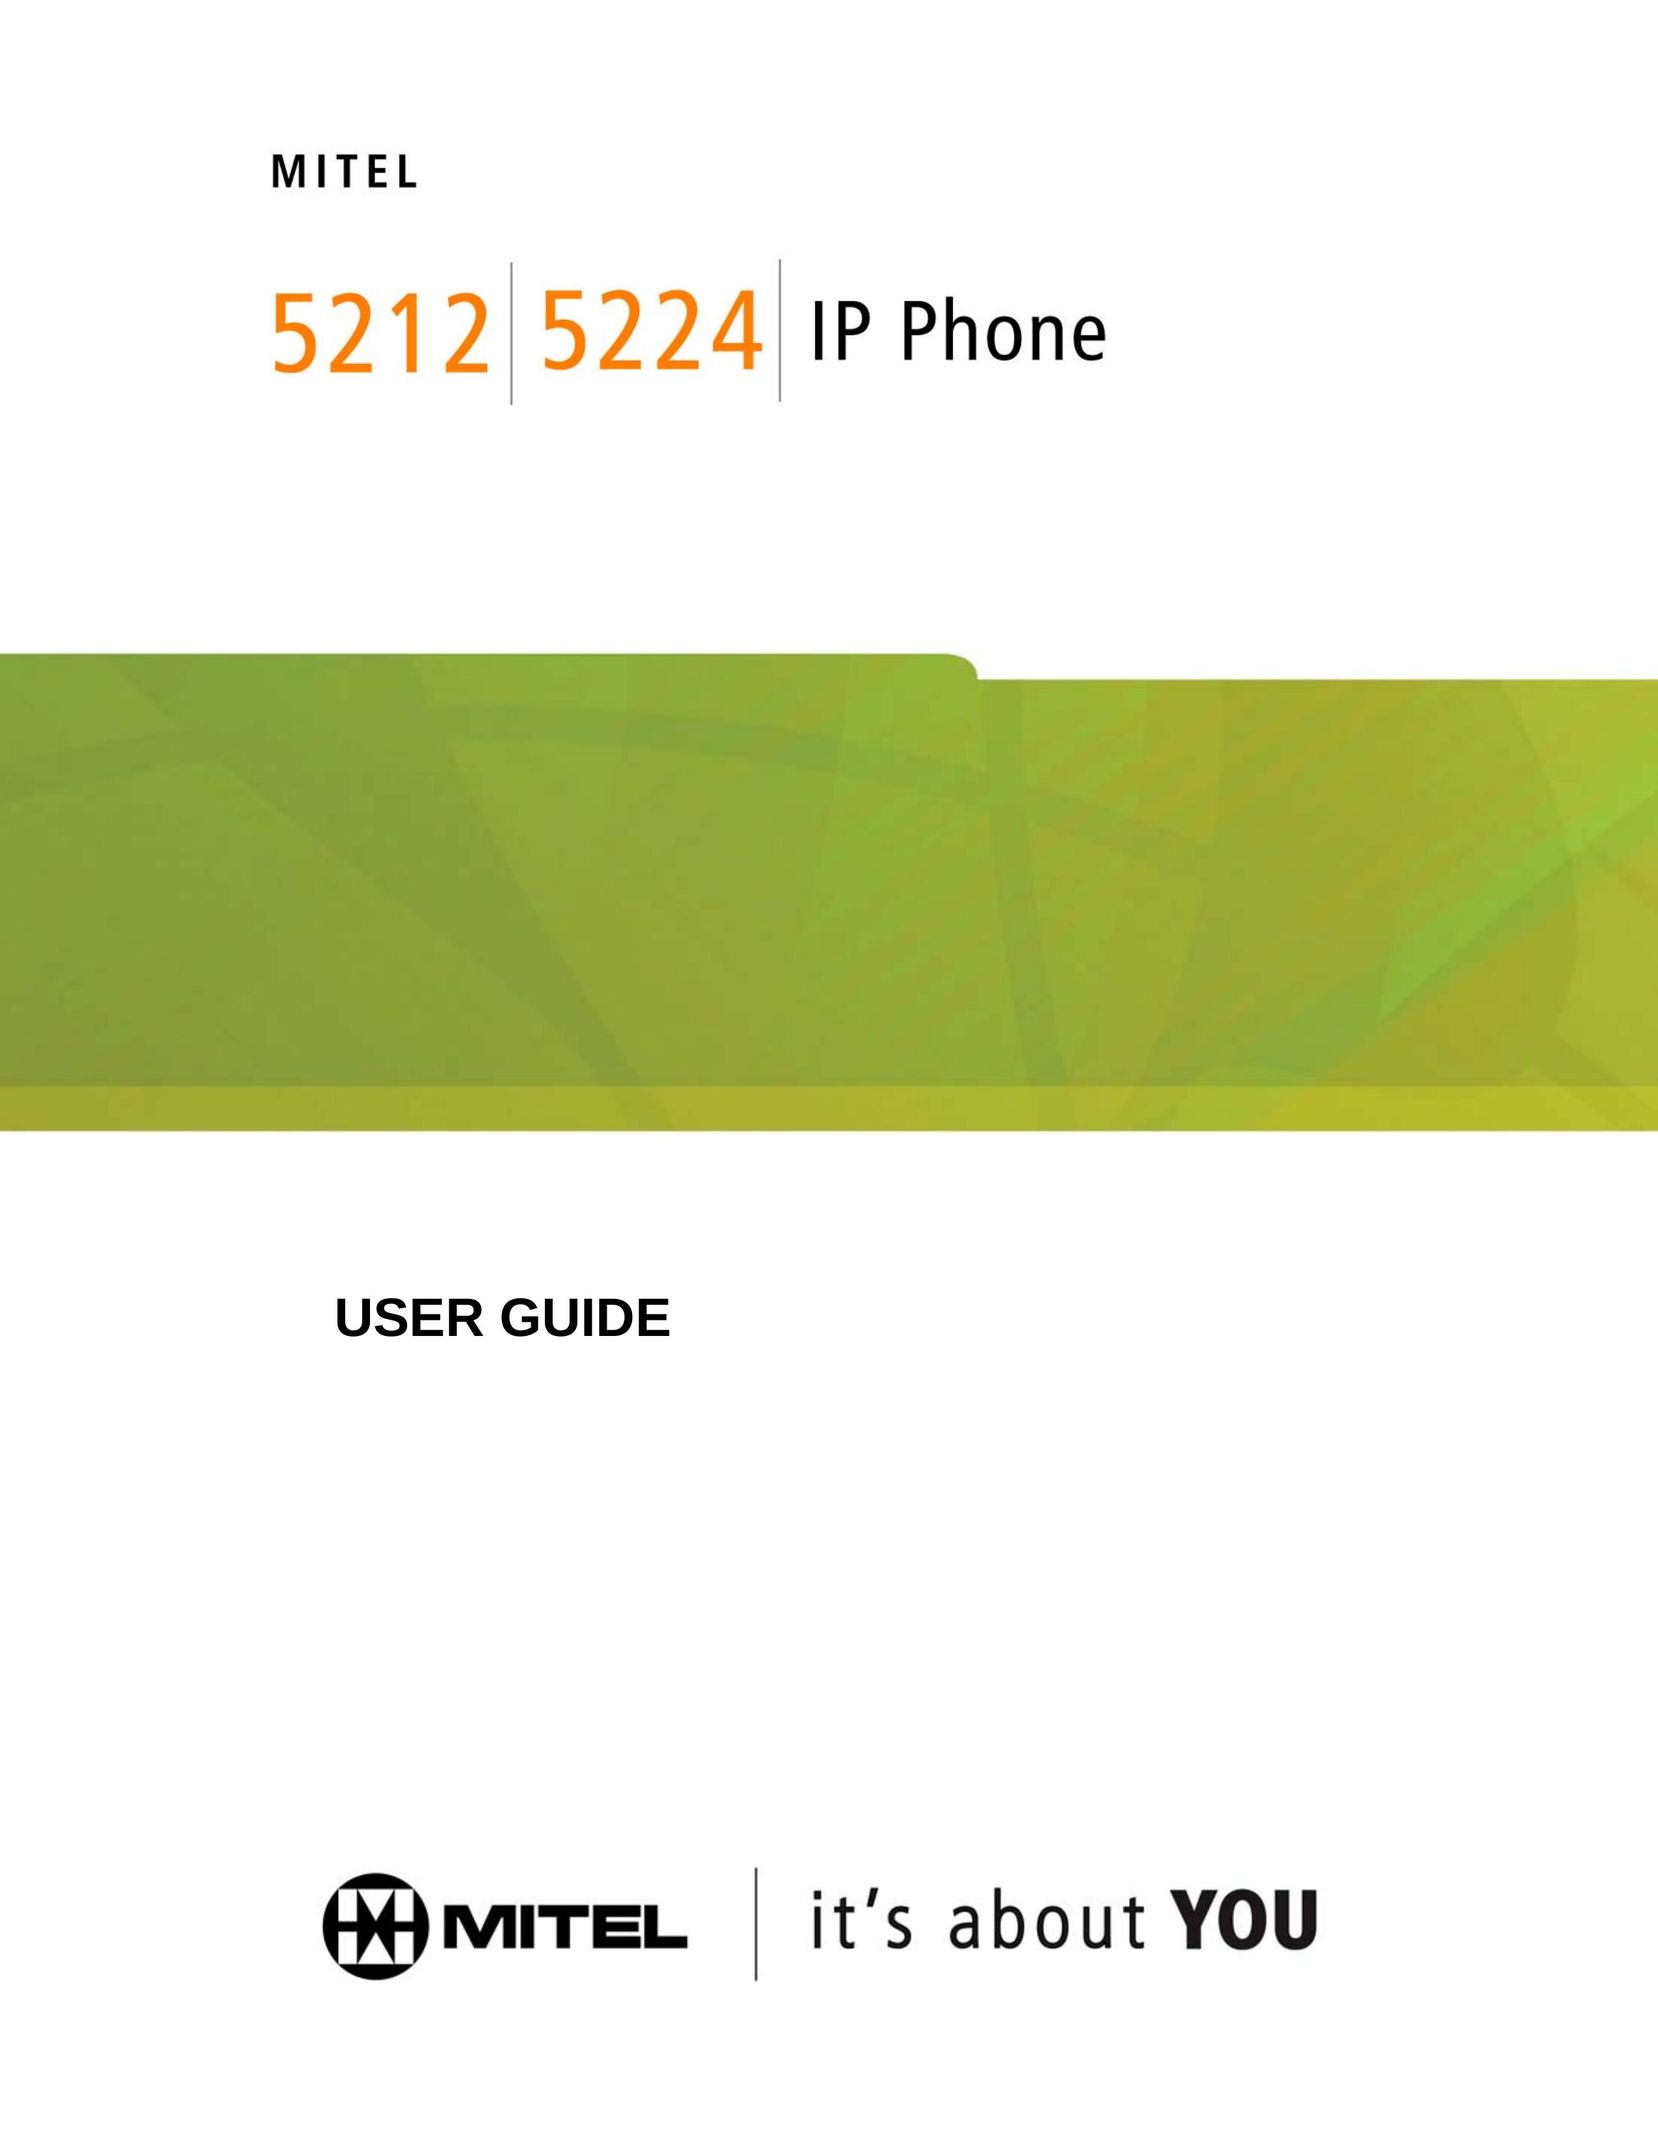 Mitel 5224 IP Phone Telephone User Manual